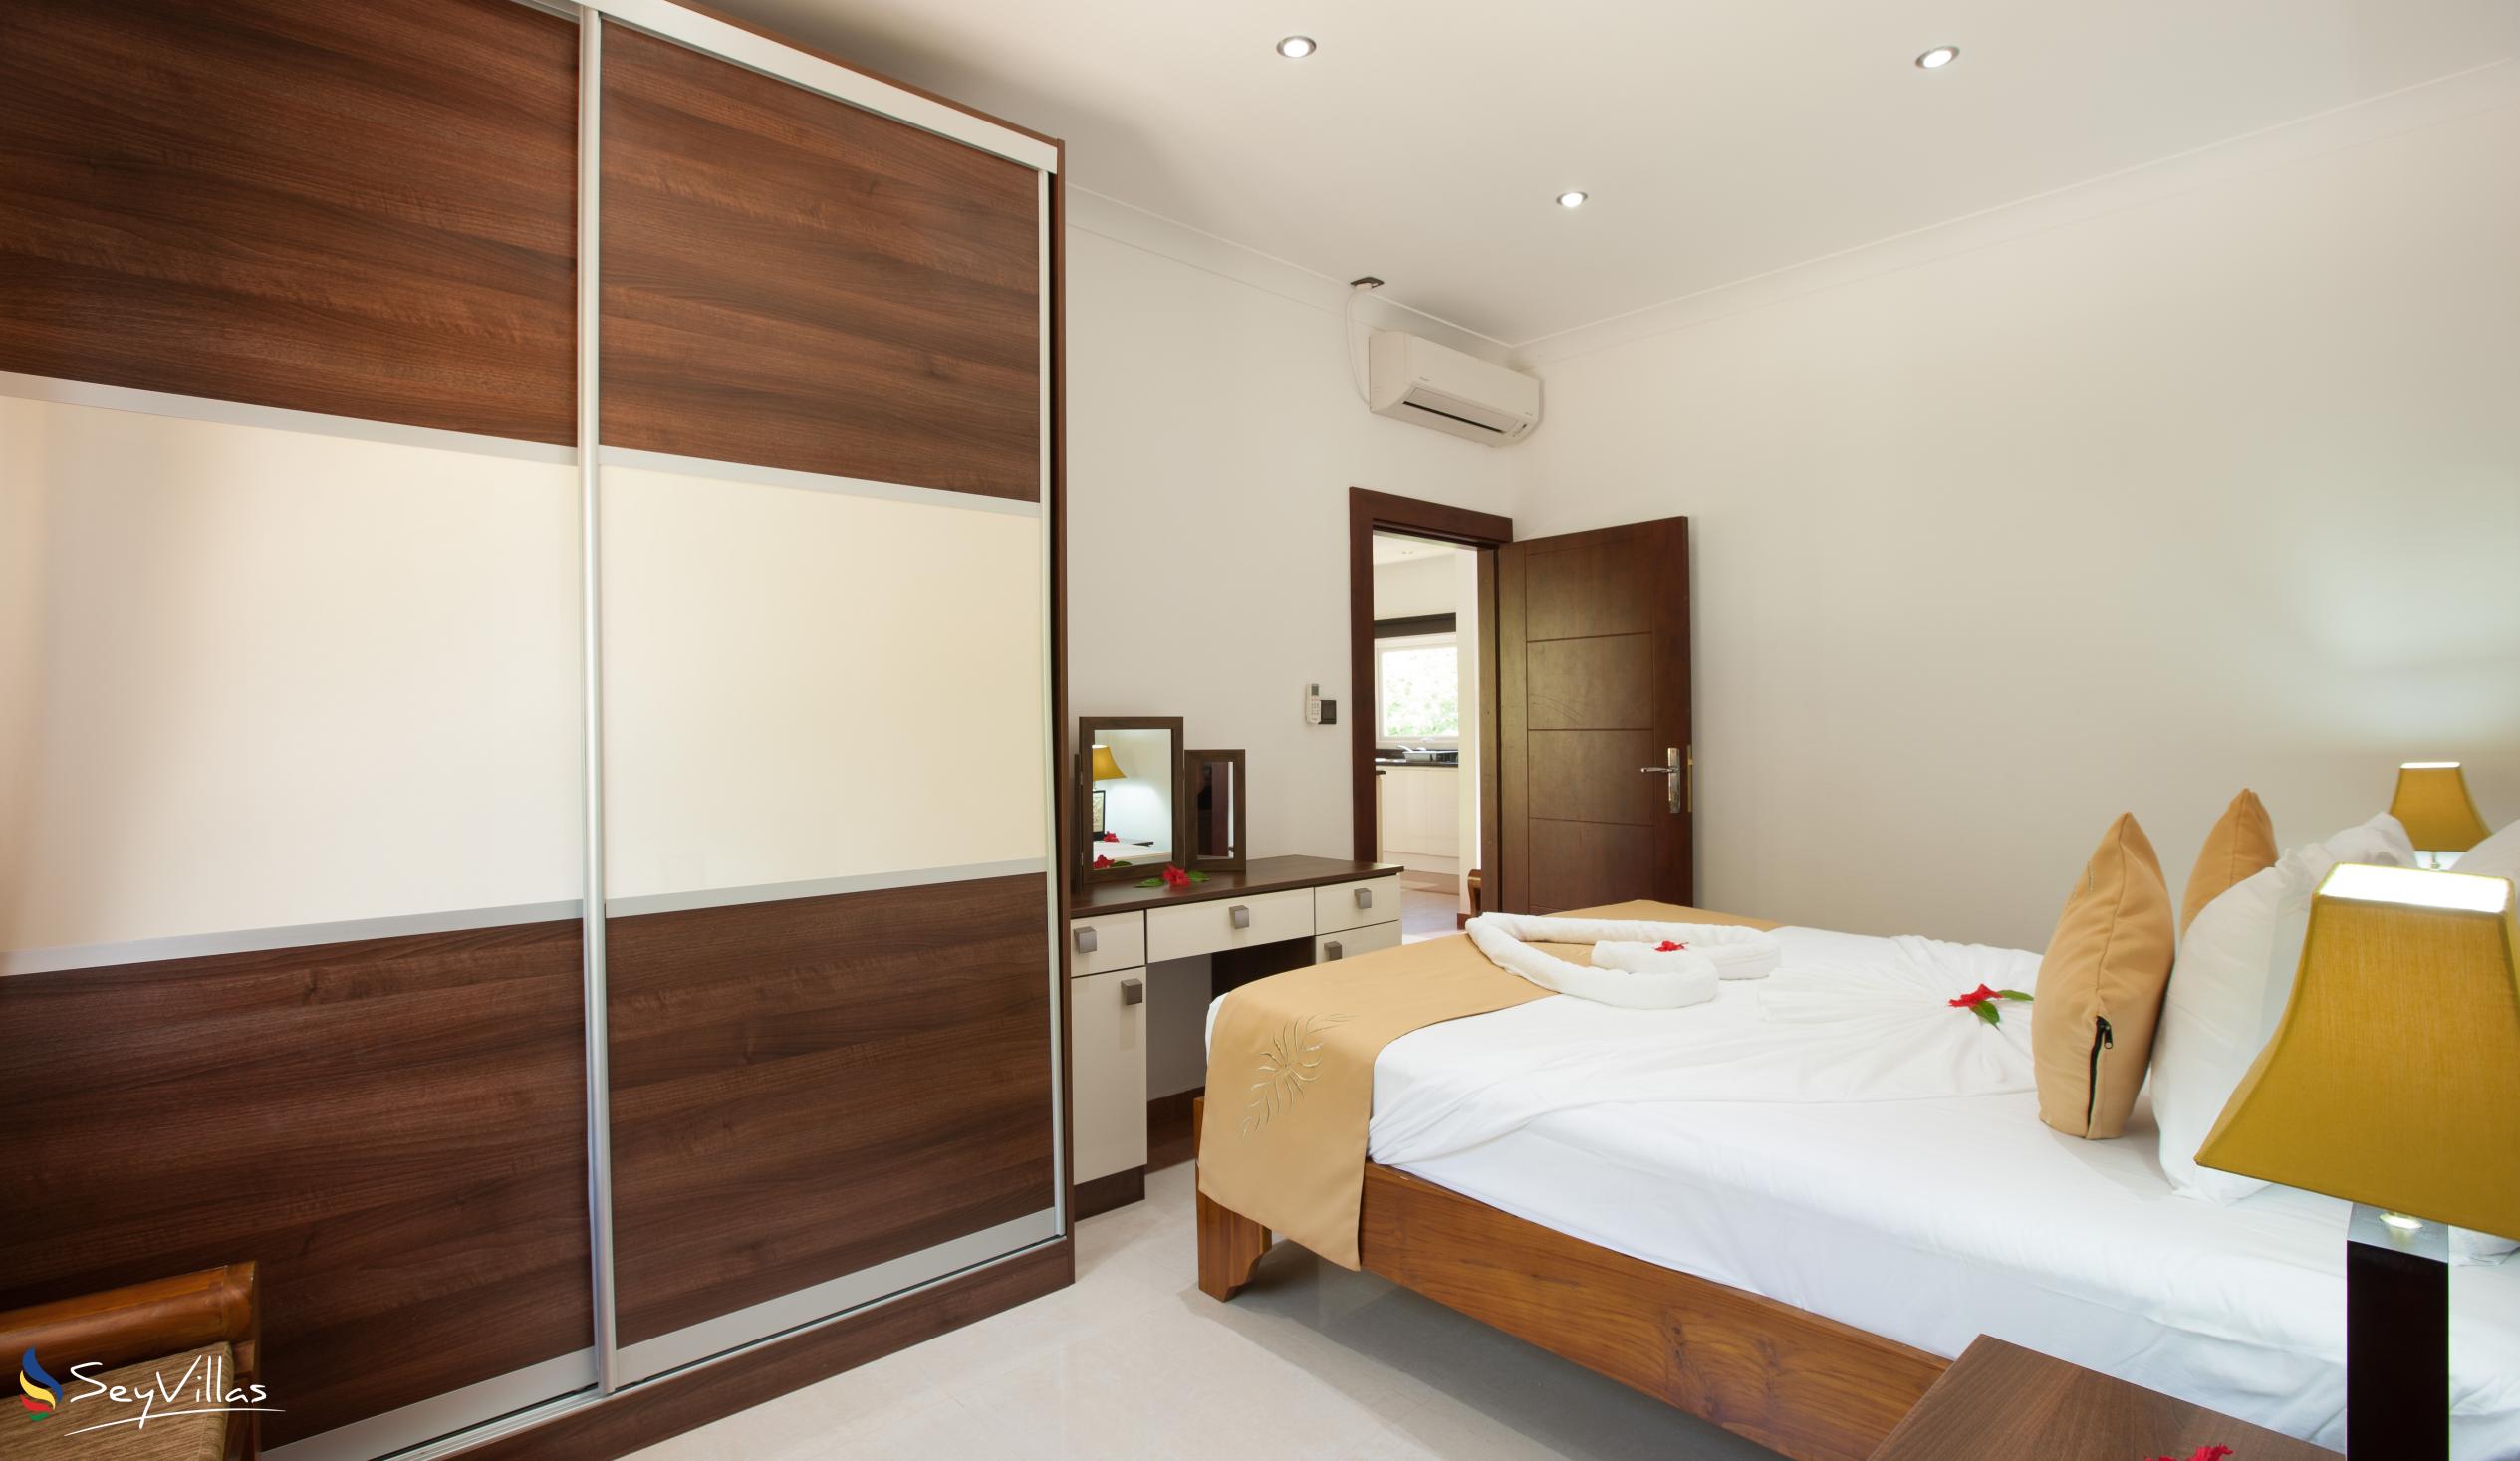 Foto 74: YASAD Luxury Beach Residence - Appartamento con 3 camere da letto - Praslin (Seychelles)